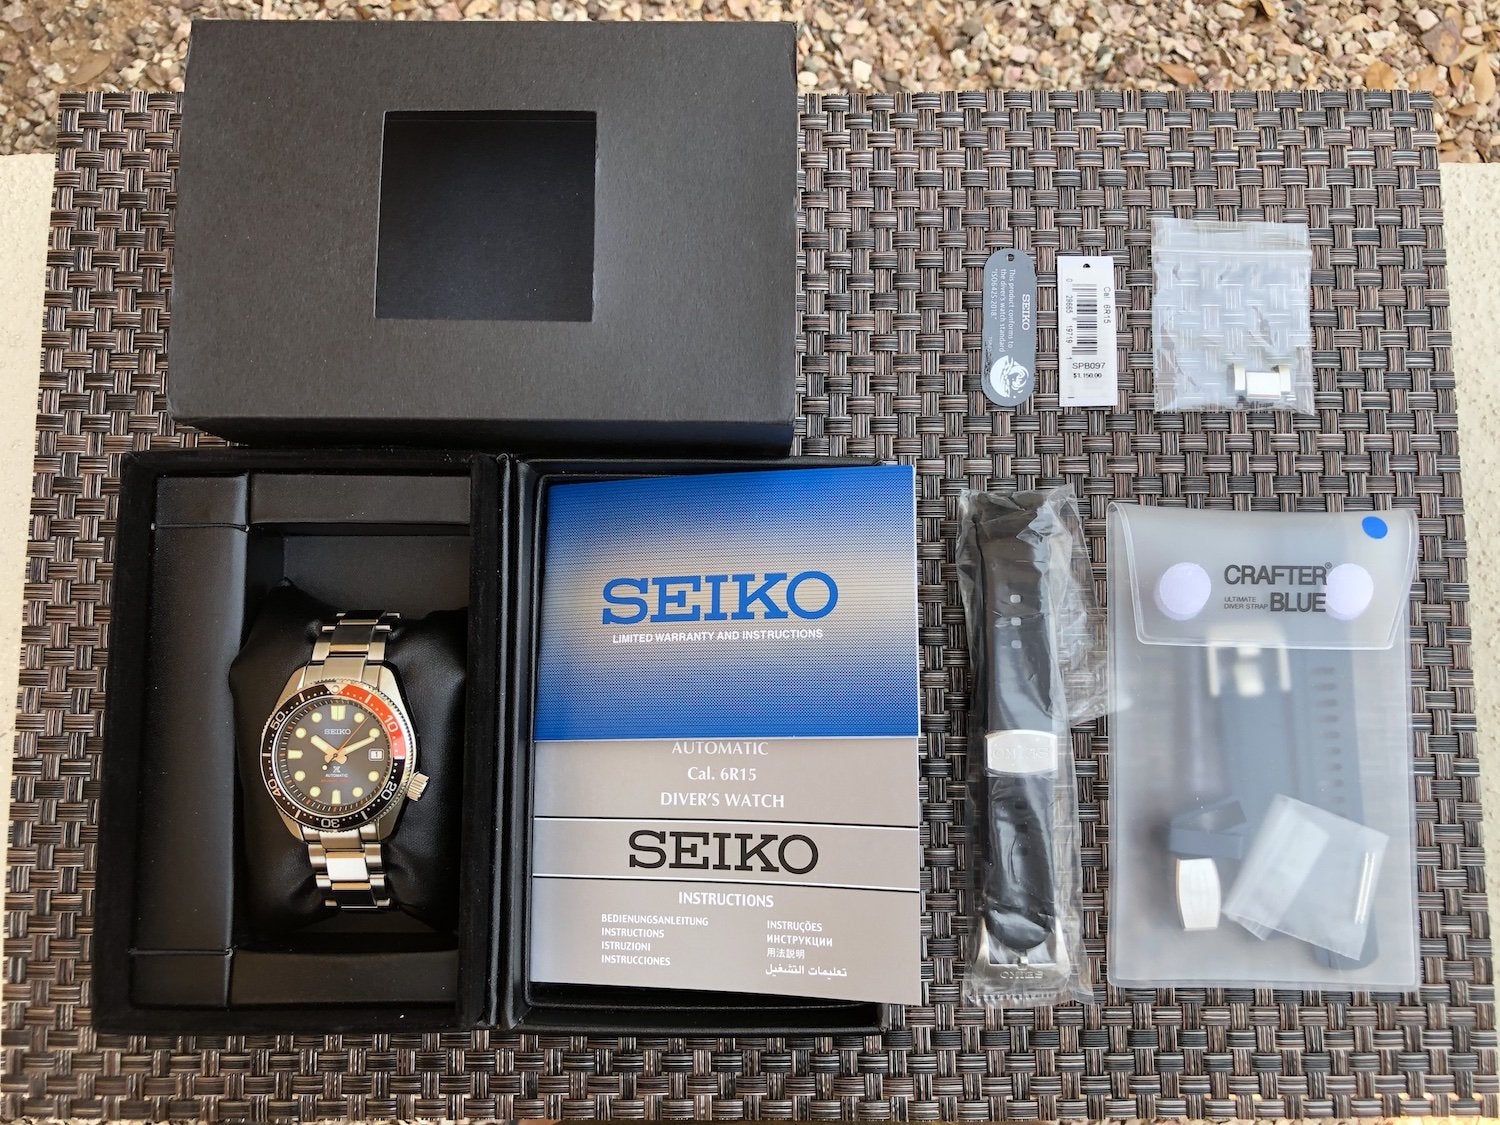 SEIKO SPB097 TWILIGHT WITH MM300 HANDSET & CRAFTER BLUE RUBBER STRAP |  WatchUSeek Watch Forums